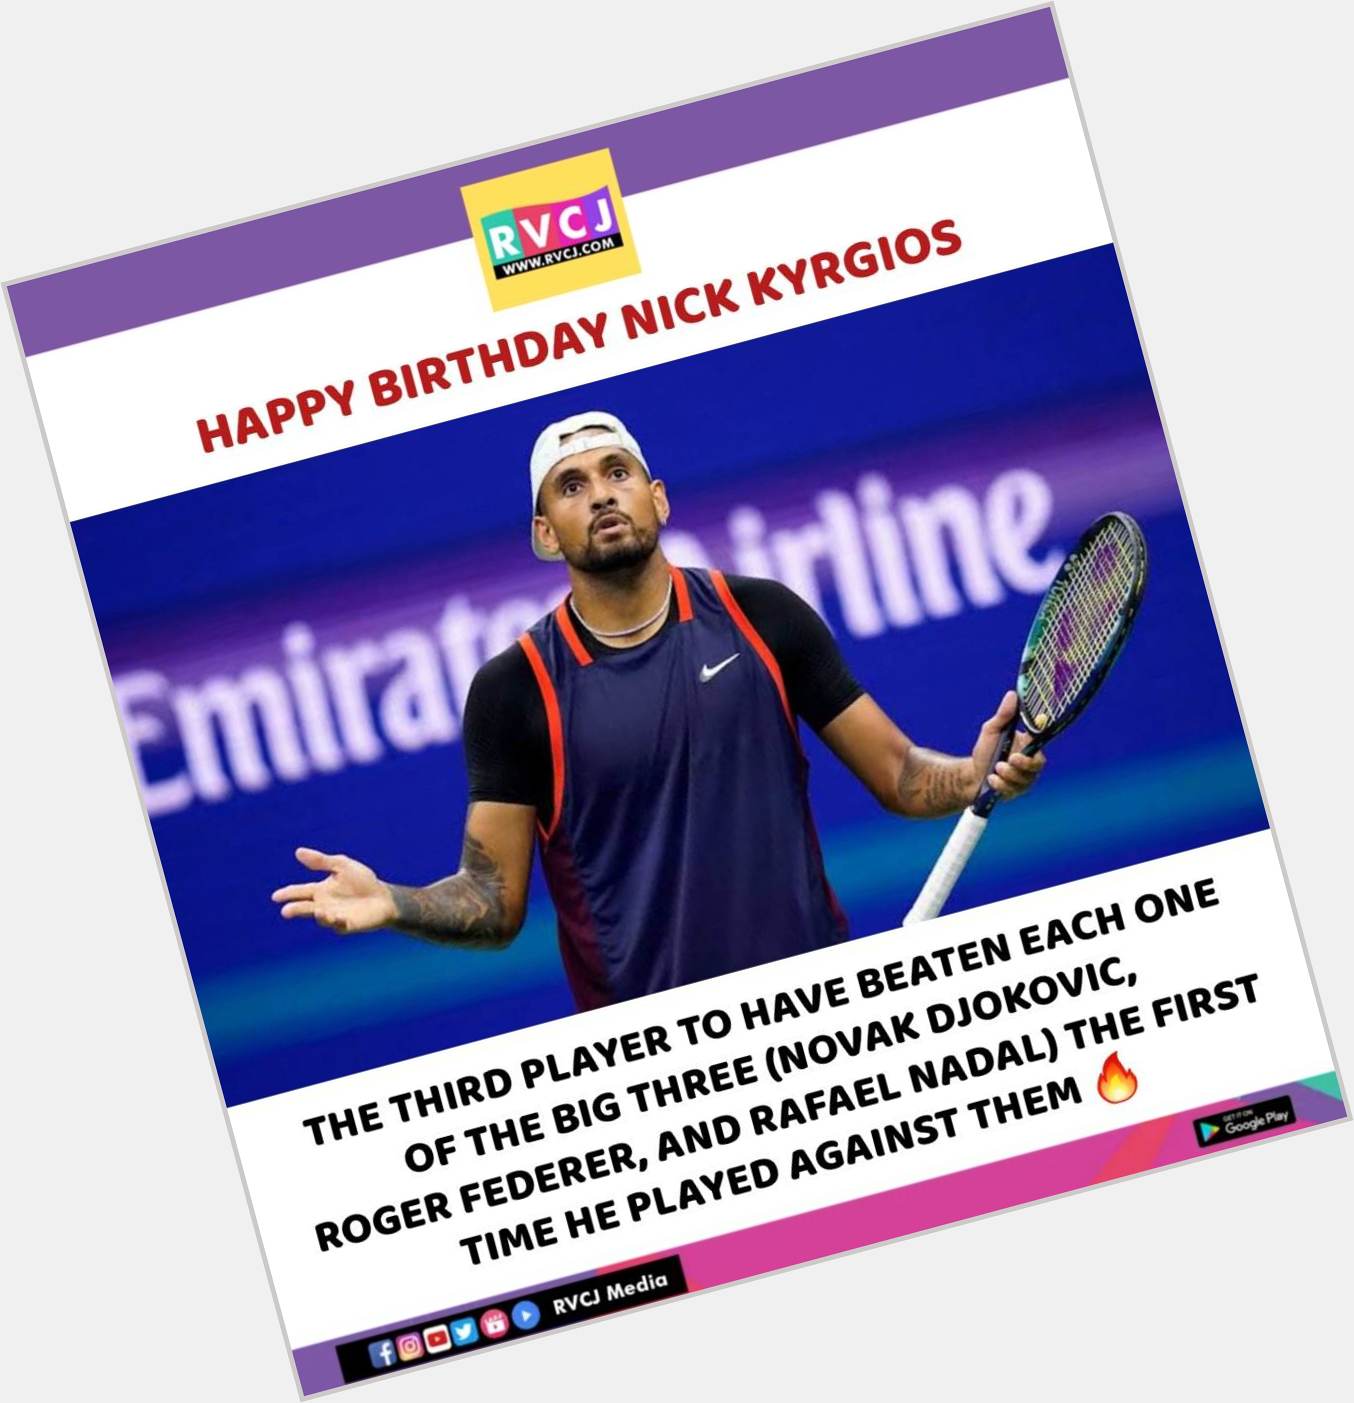 Happy Birthday Nick Kyrgios!  